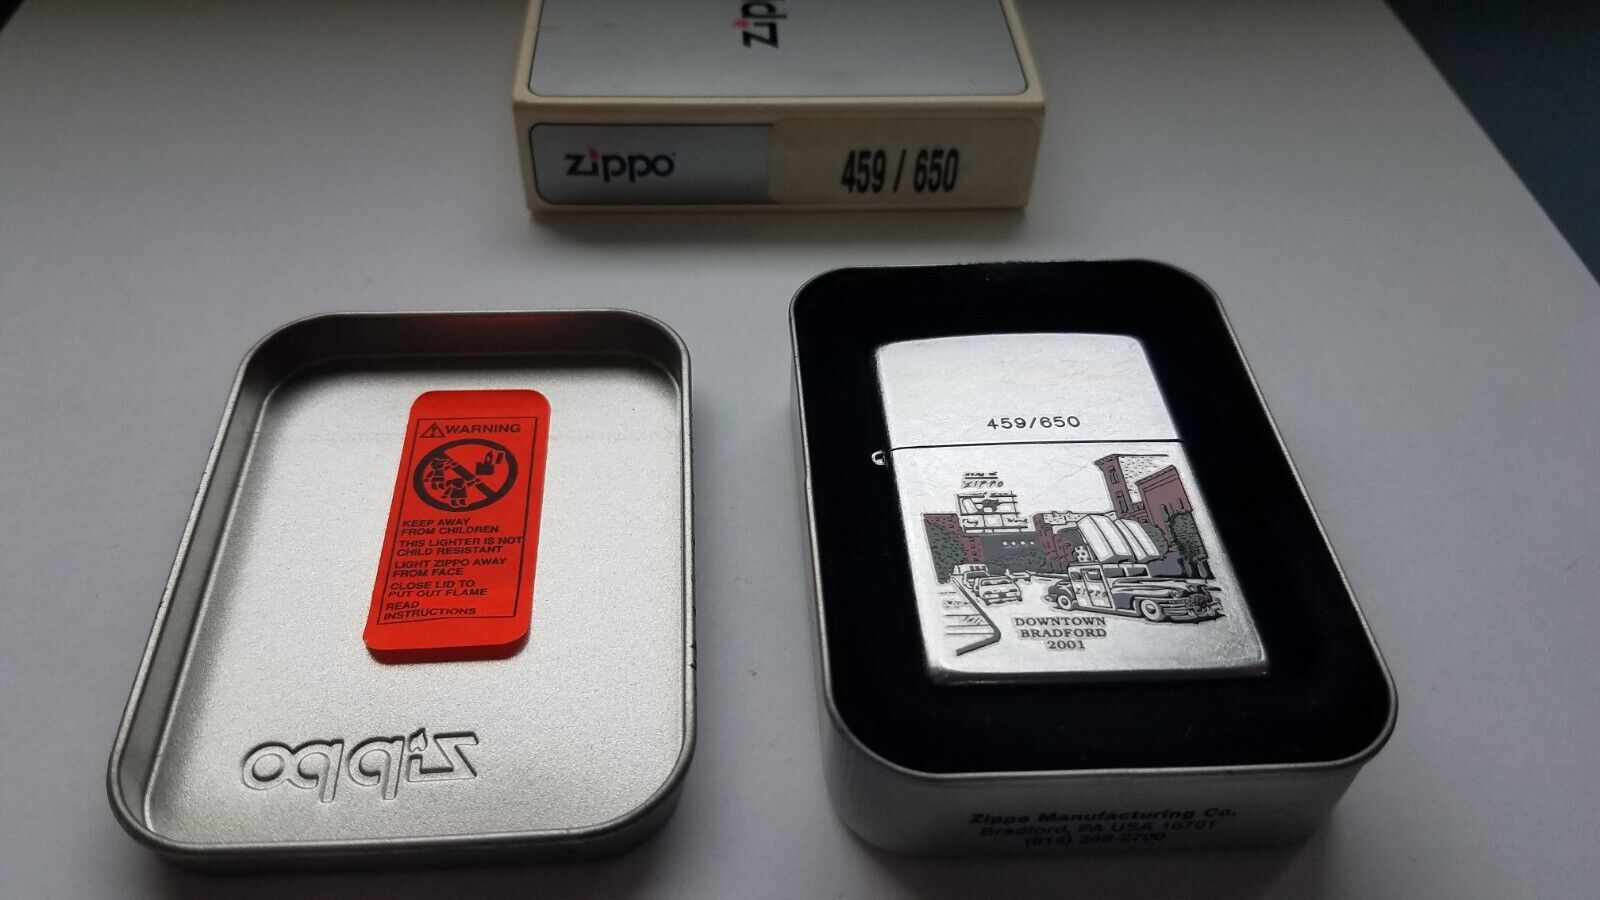 2001 ZIPPO #459 / 650: DOWNTOWN BRADFORD SERIES WITH ZIPPO CAR & FACTORY